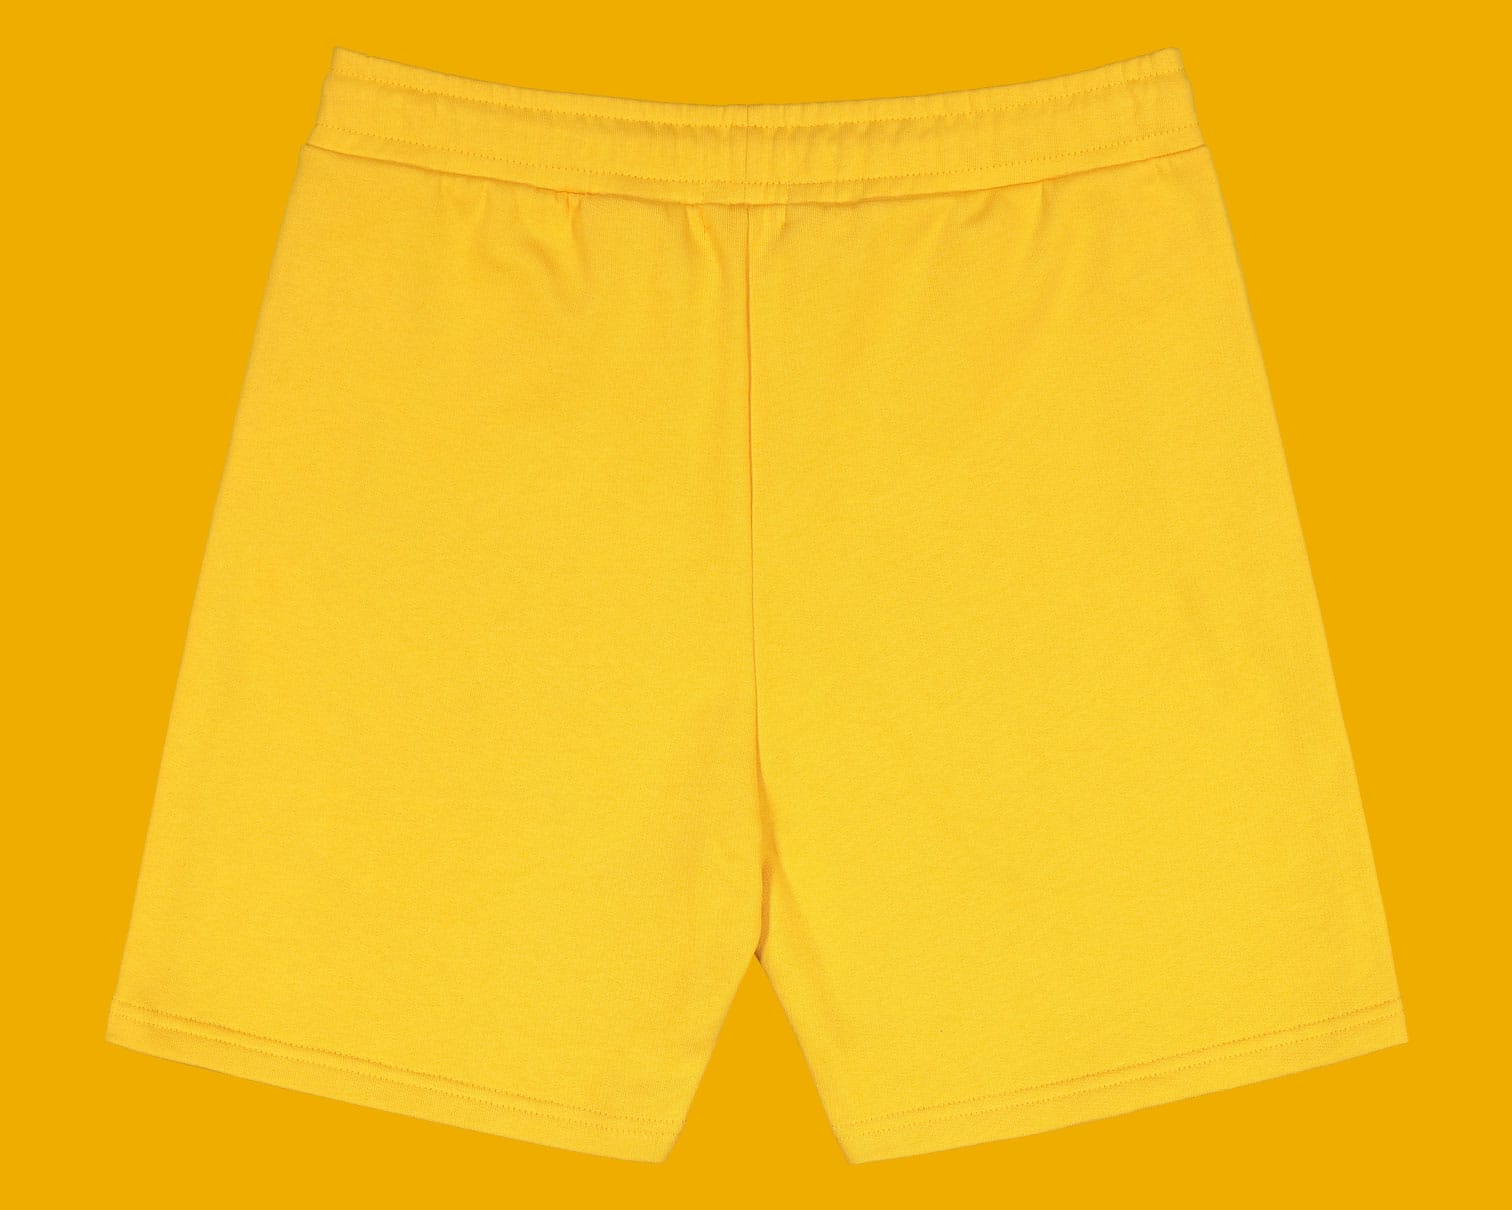 all good shorts, yellow